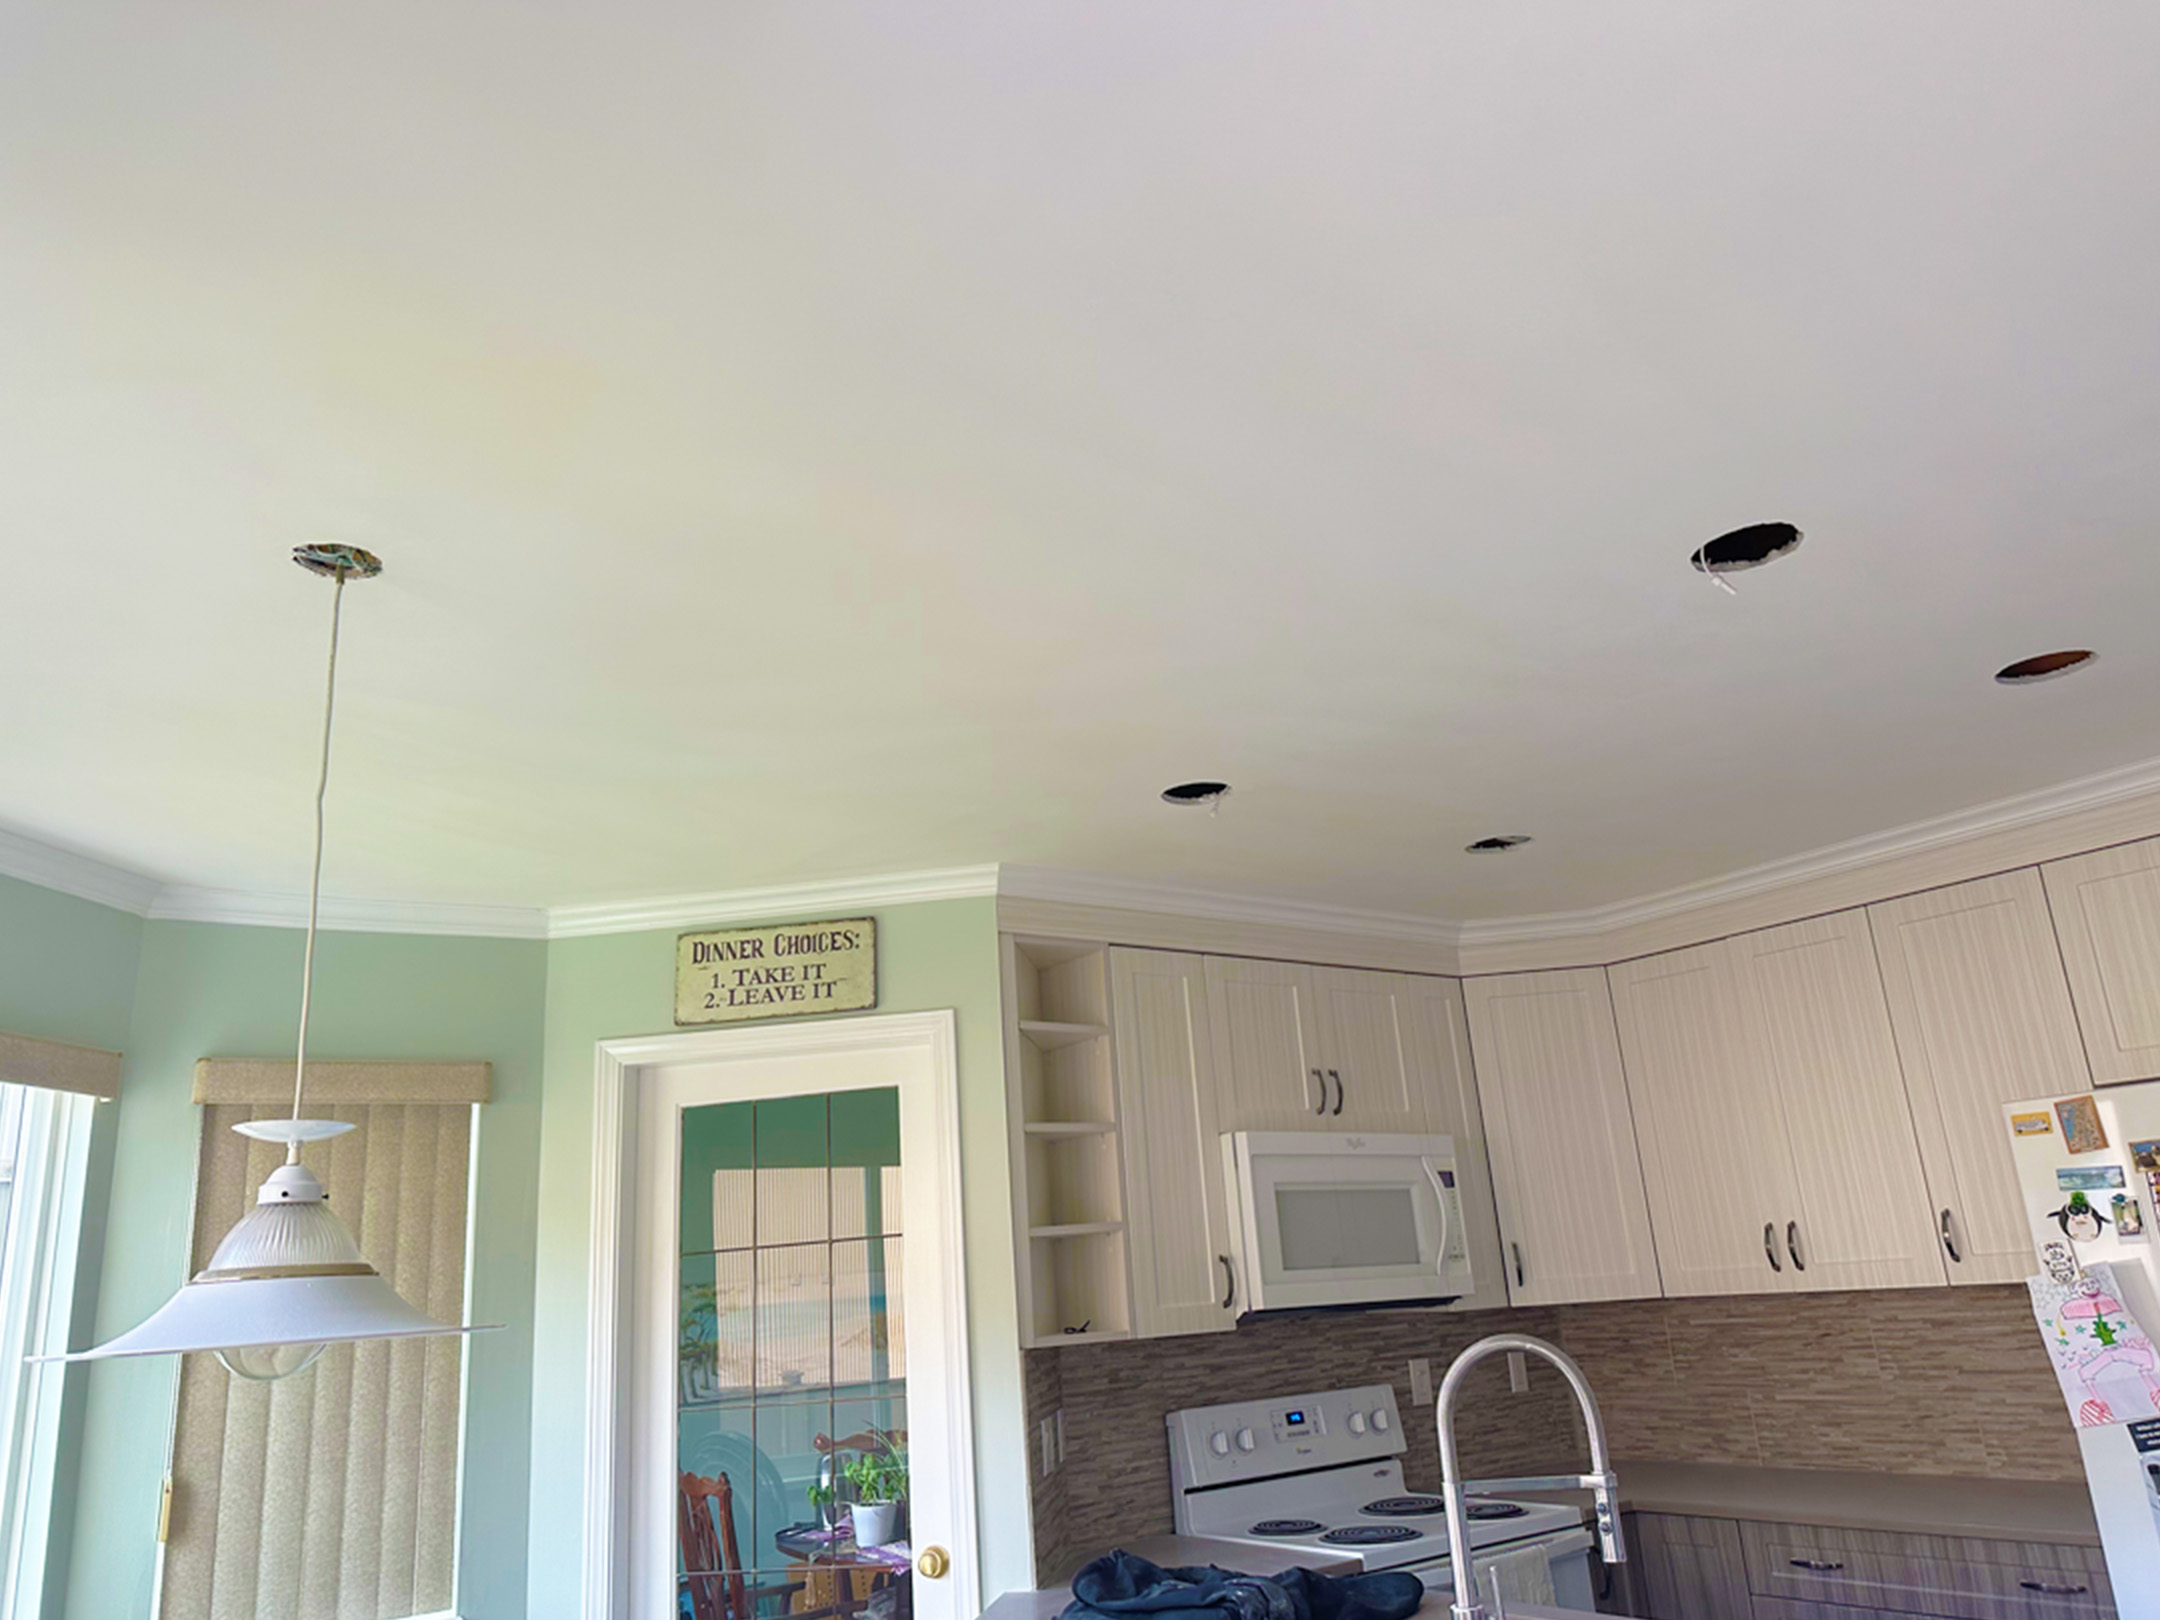 drywall repair tynehead surrey bc canada ceiling texture and painting